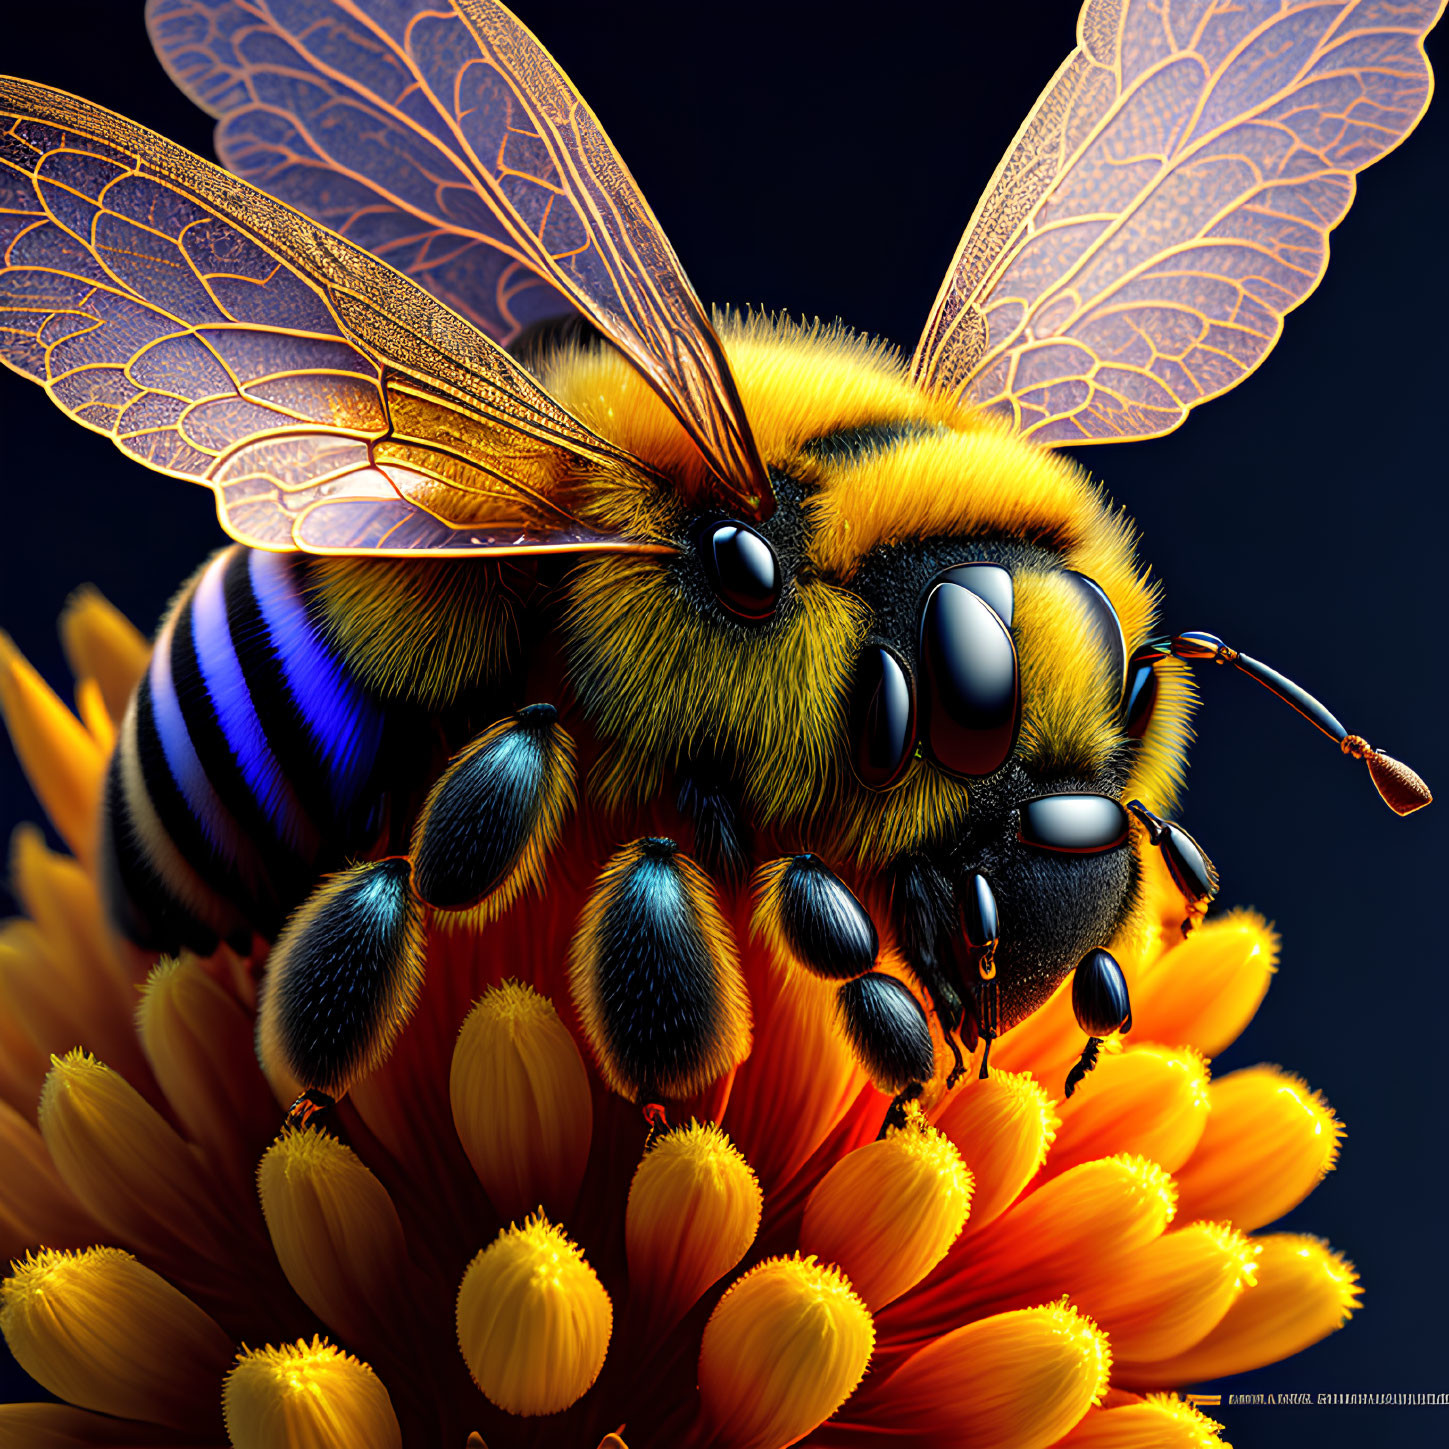 Detailed Realistic Illustration of Bee on Orange Flowers